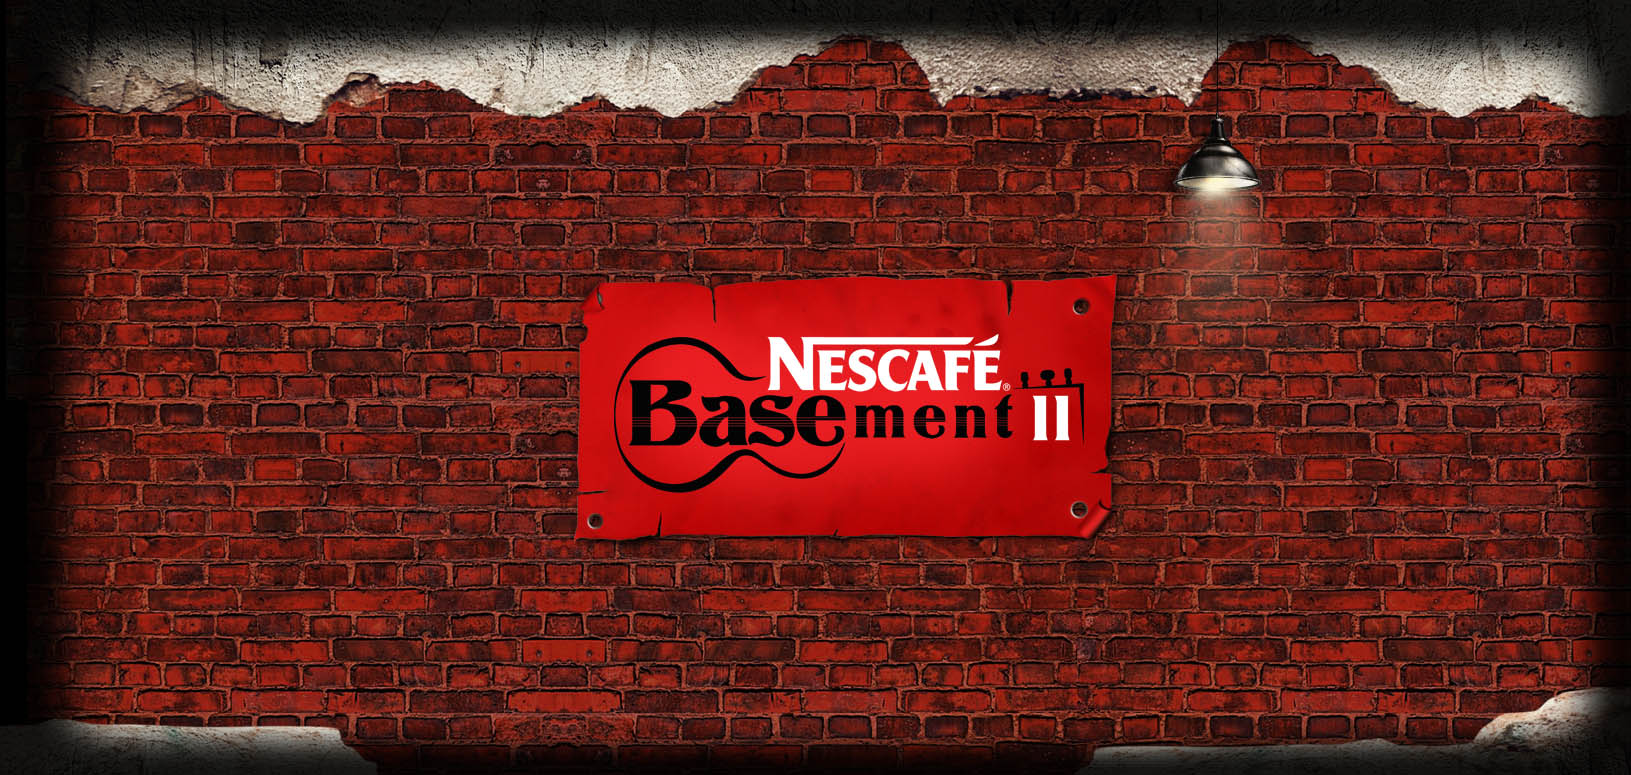 Nescafe basement season 5 mp3 download